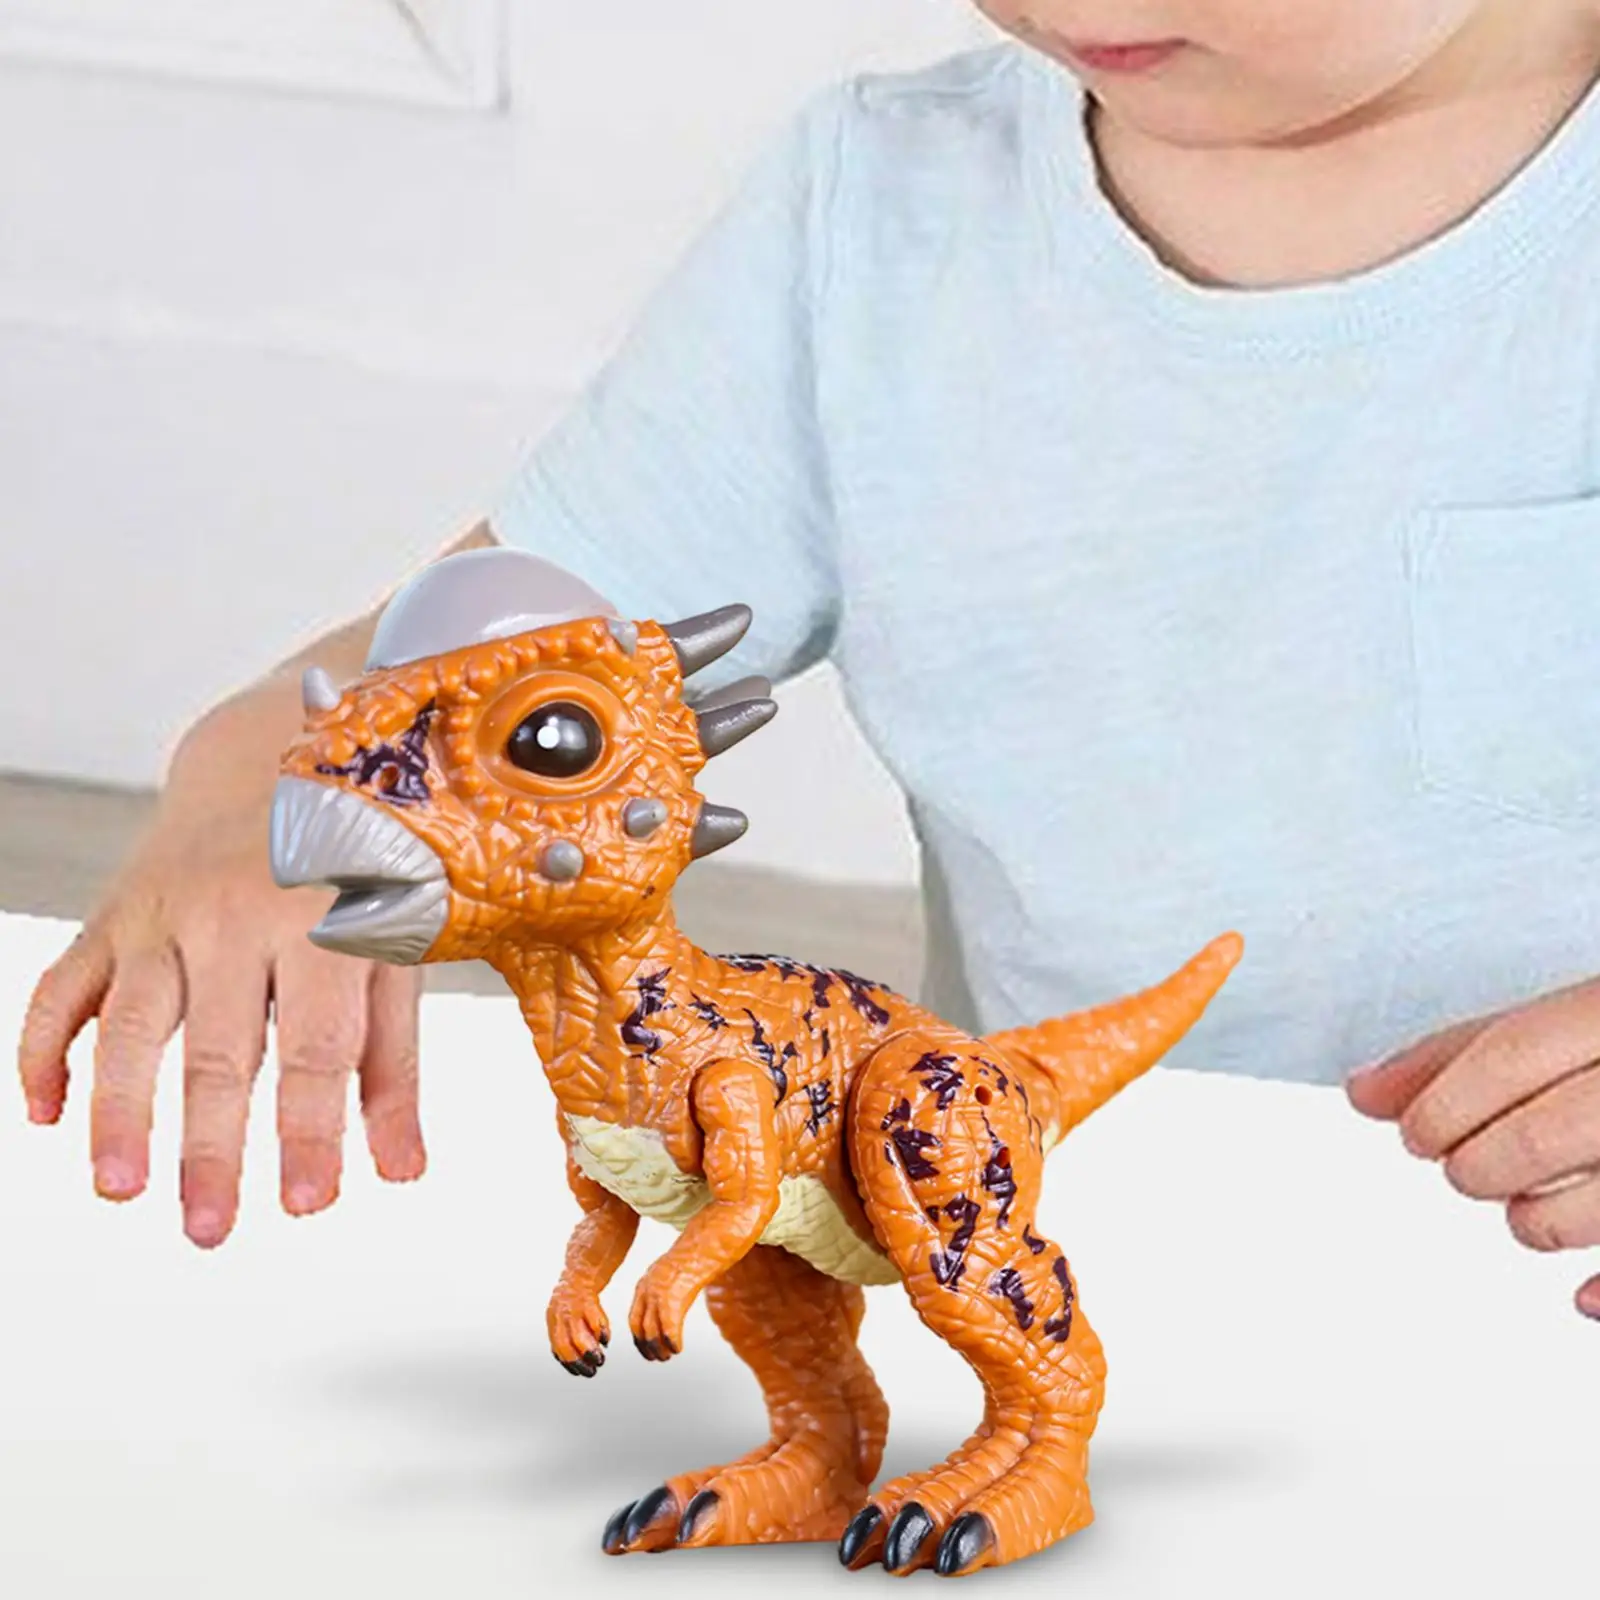 Dinosaur Action Figure Toy Animal Figurine Model for Desktop Role Play Cars